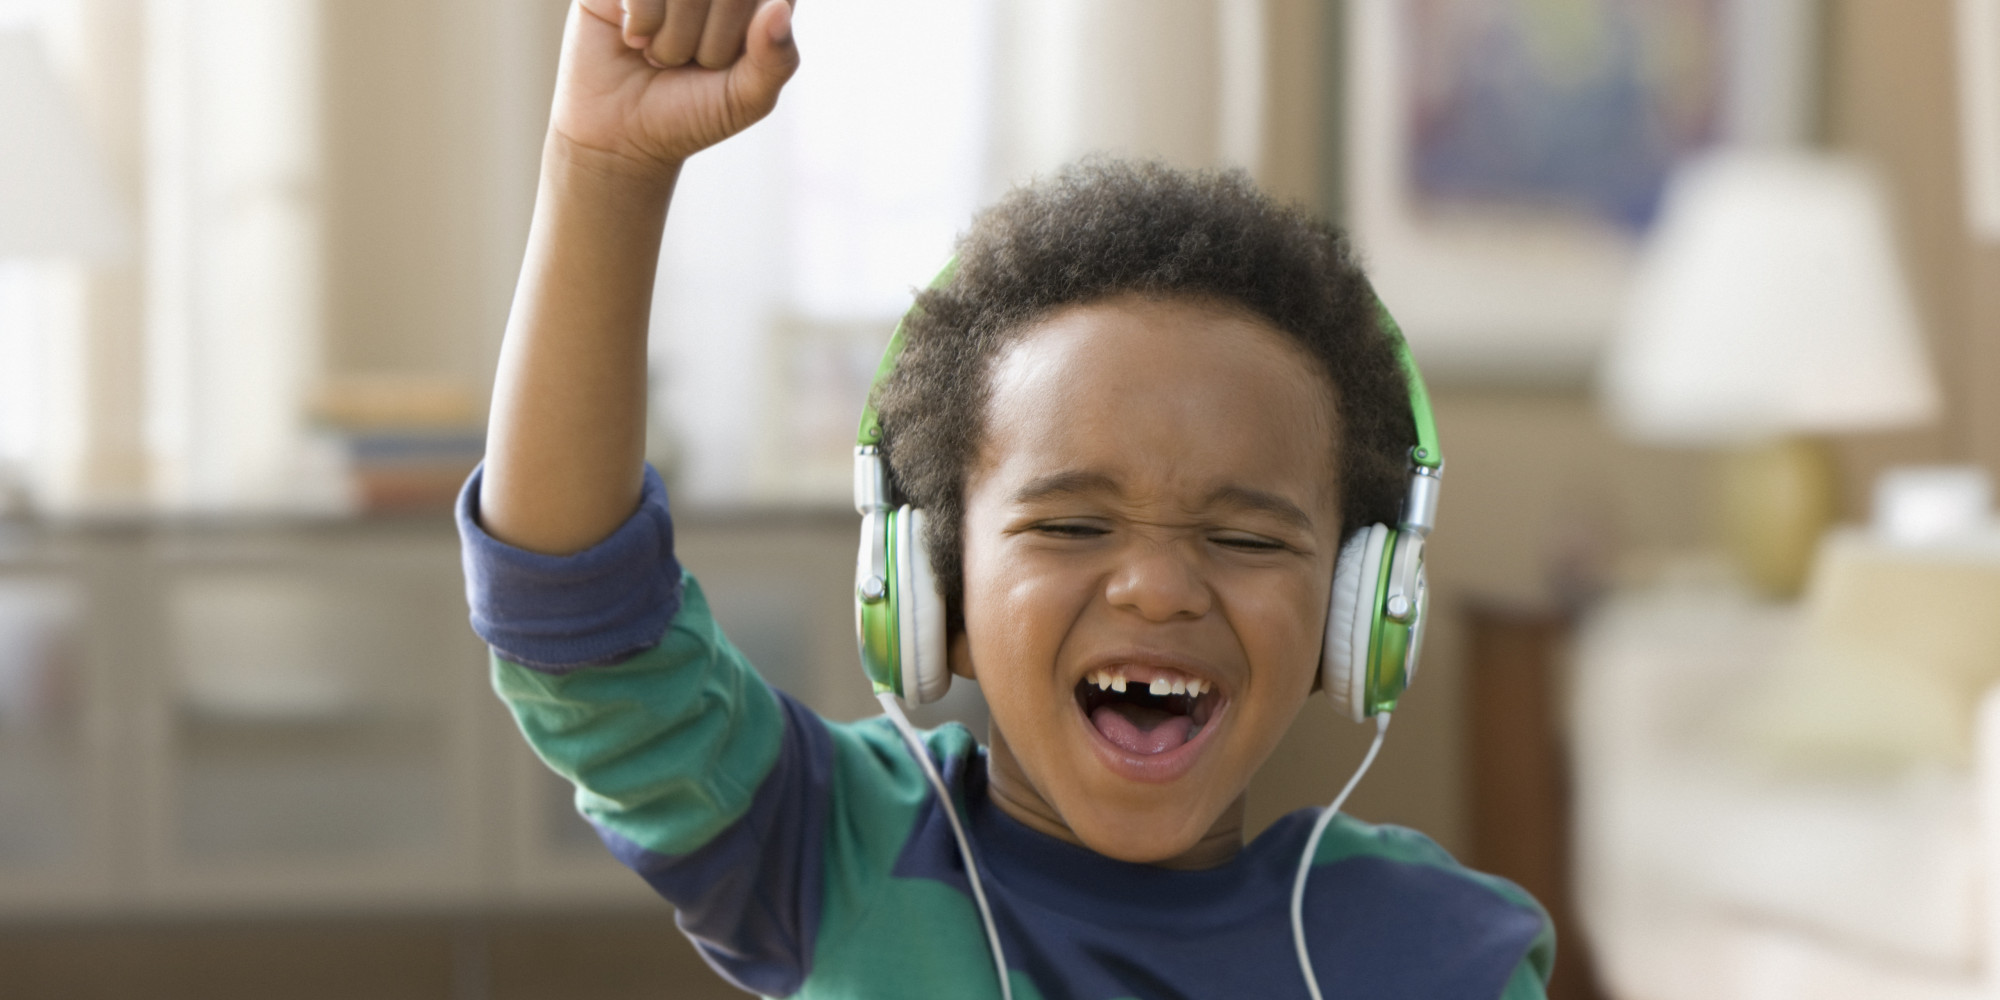 Black boy listening to music on headphones